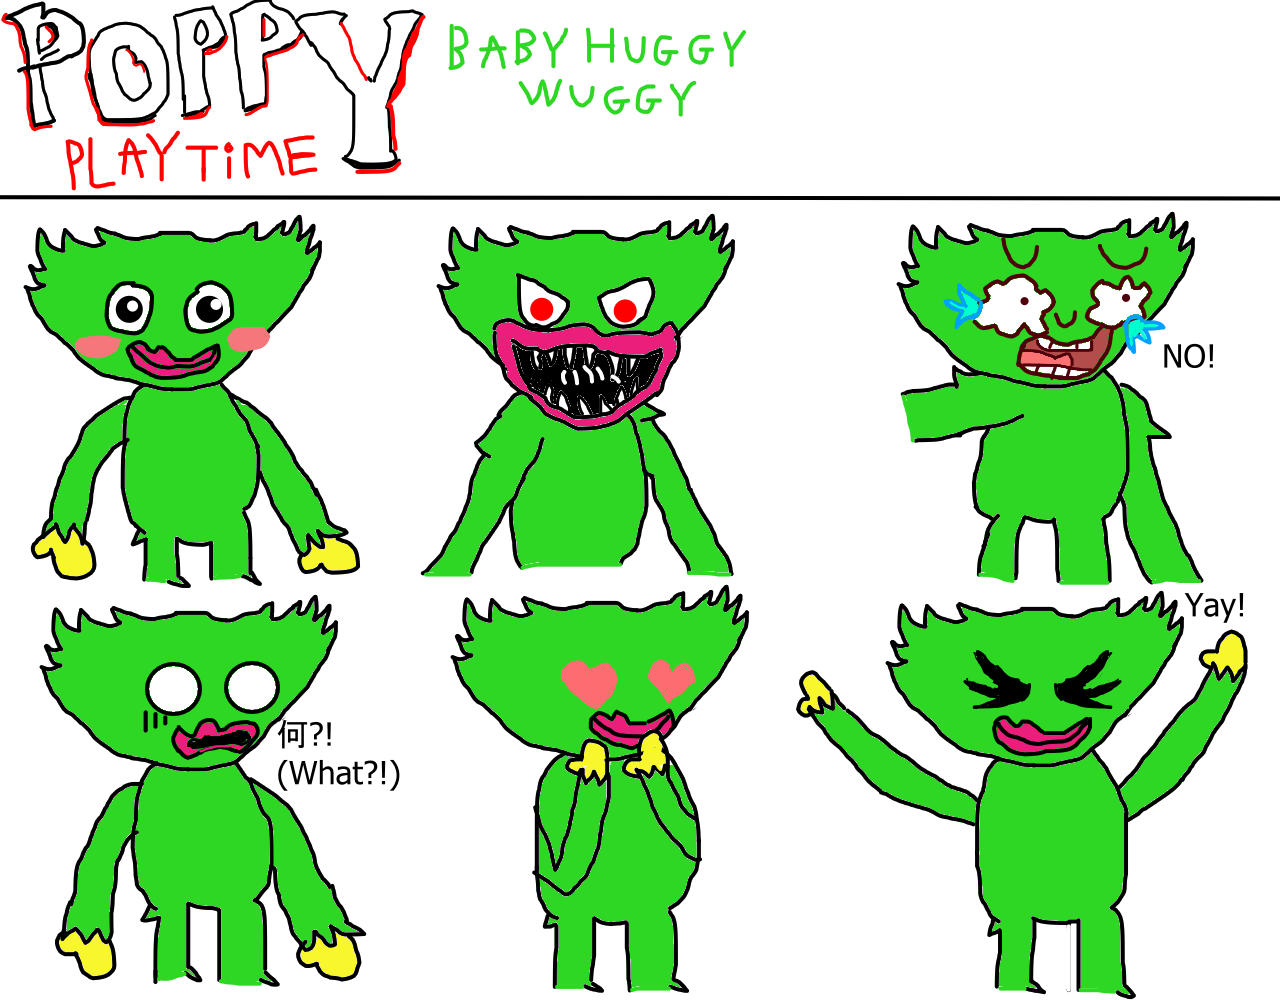 Poppy Playtime - Huggy Wuggy by kirbybaby64 on DeviantArt